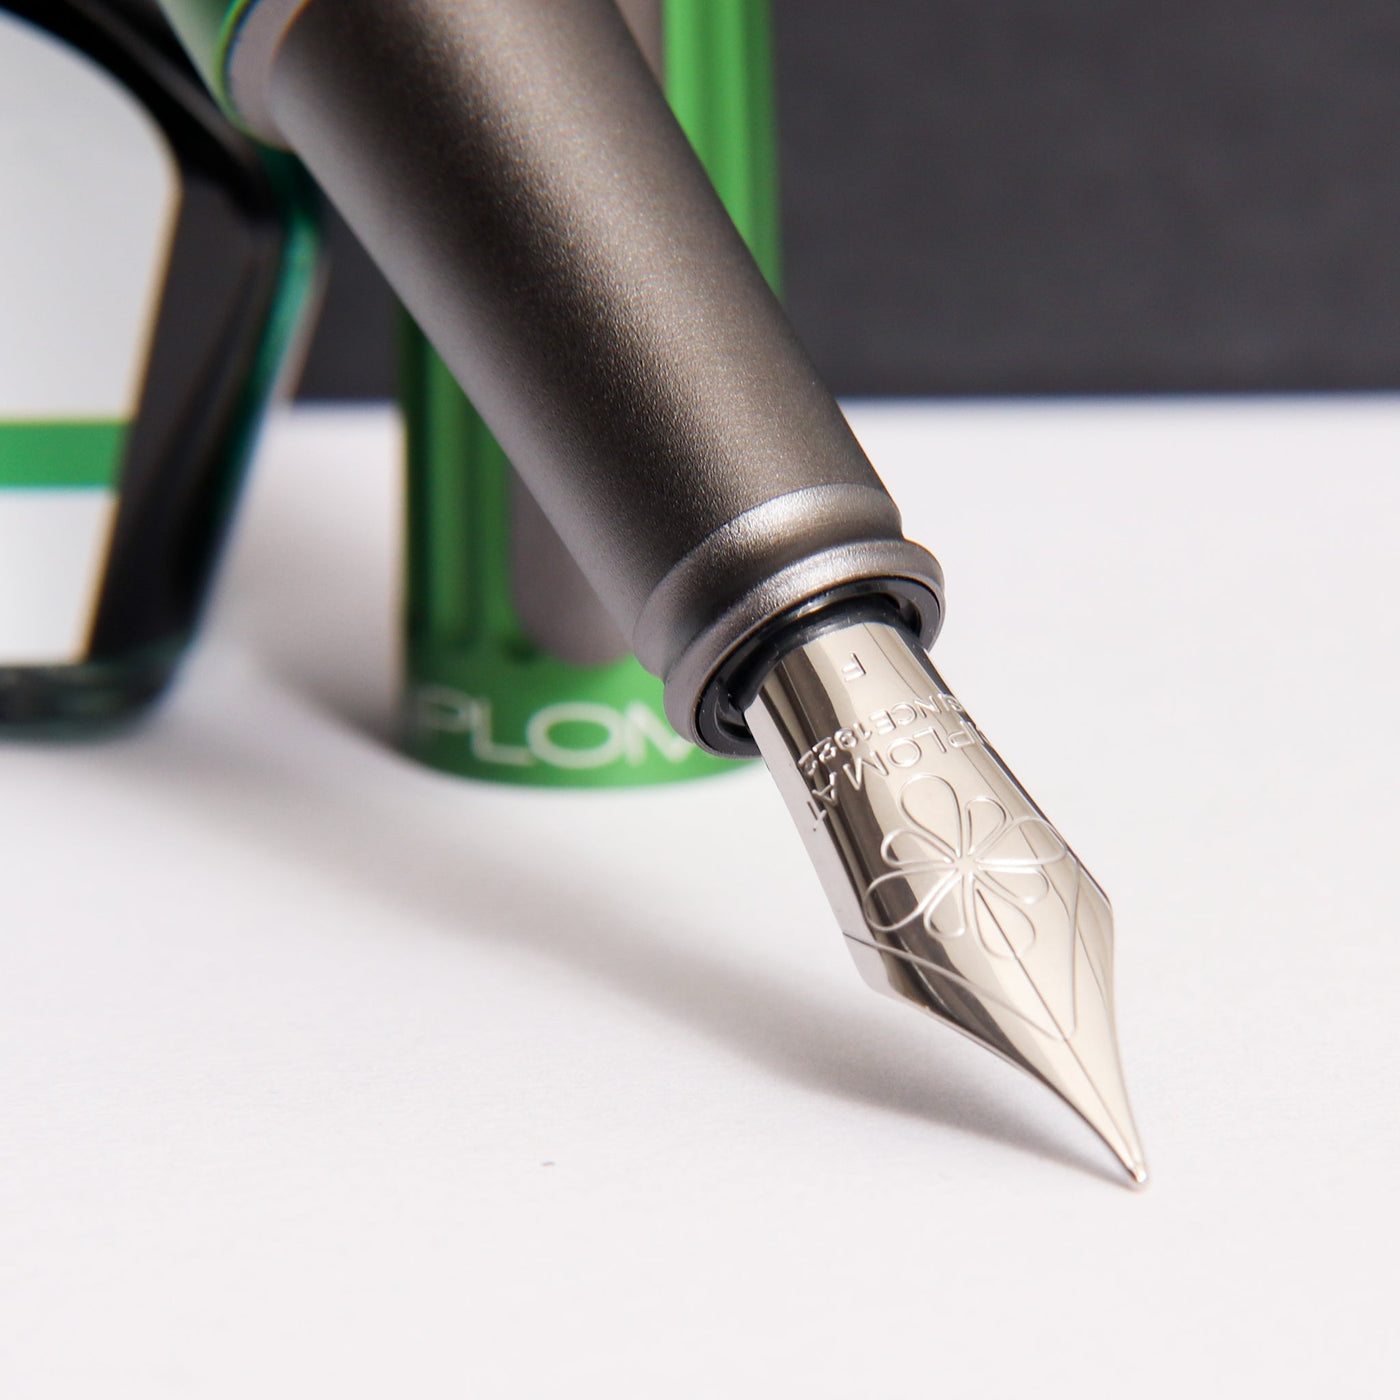 Diplomat-Aero-Green-Fountain-Pen-Gift-Set-Nib-Details